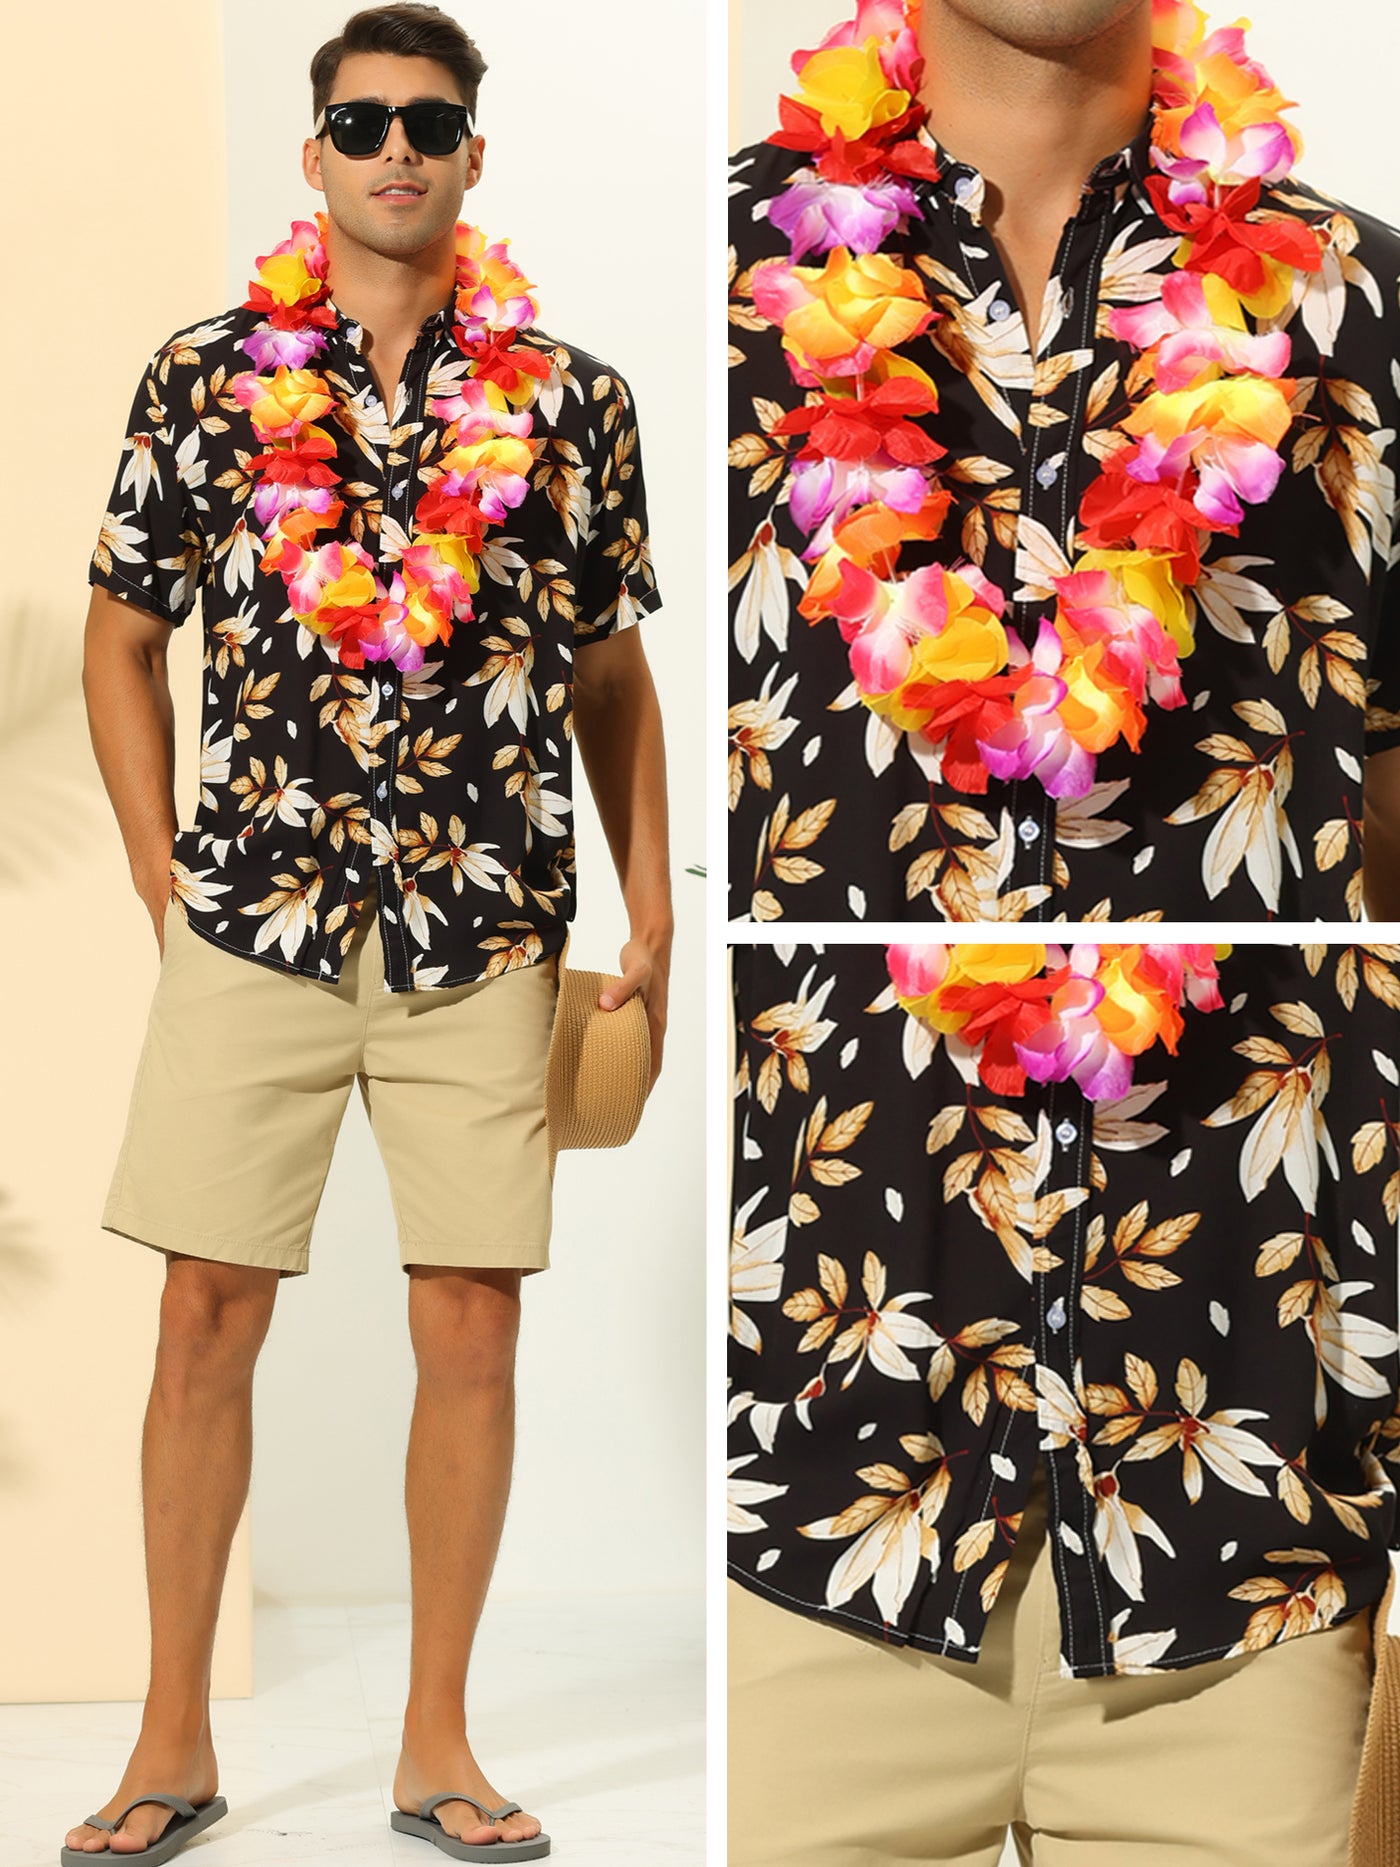 Bublédon Hawaiian Leaf Print Shirts for Men's Button Down Short Sleeve Summer Pattern Shirt